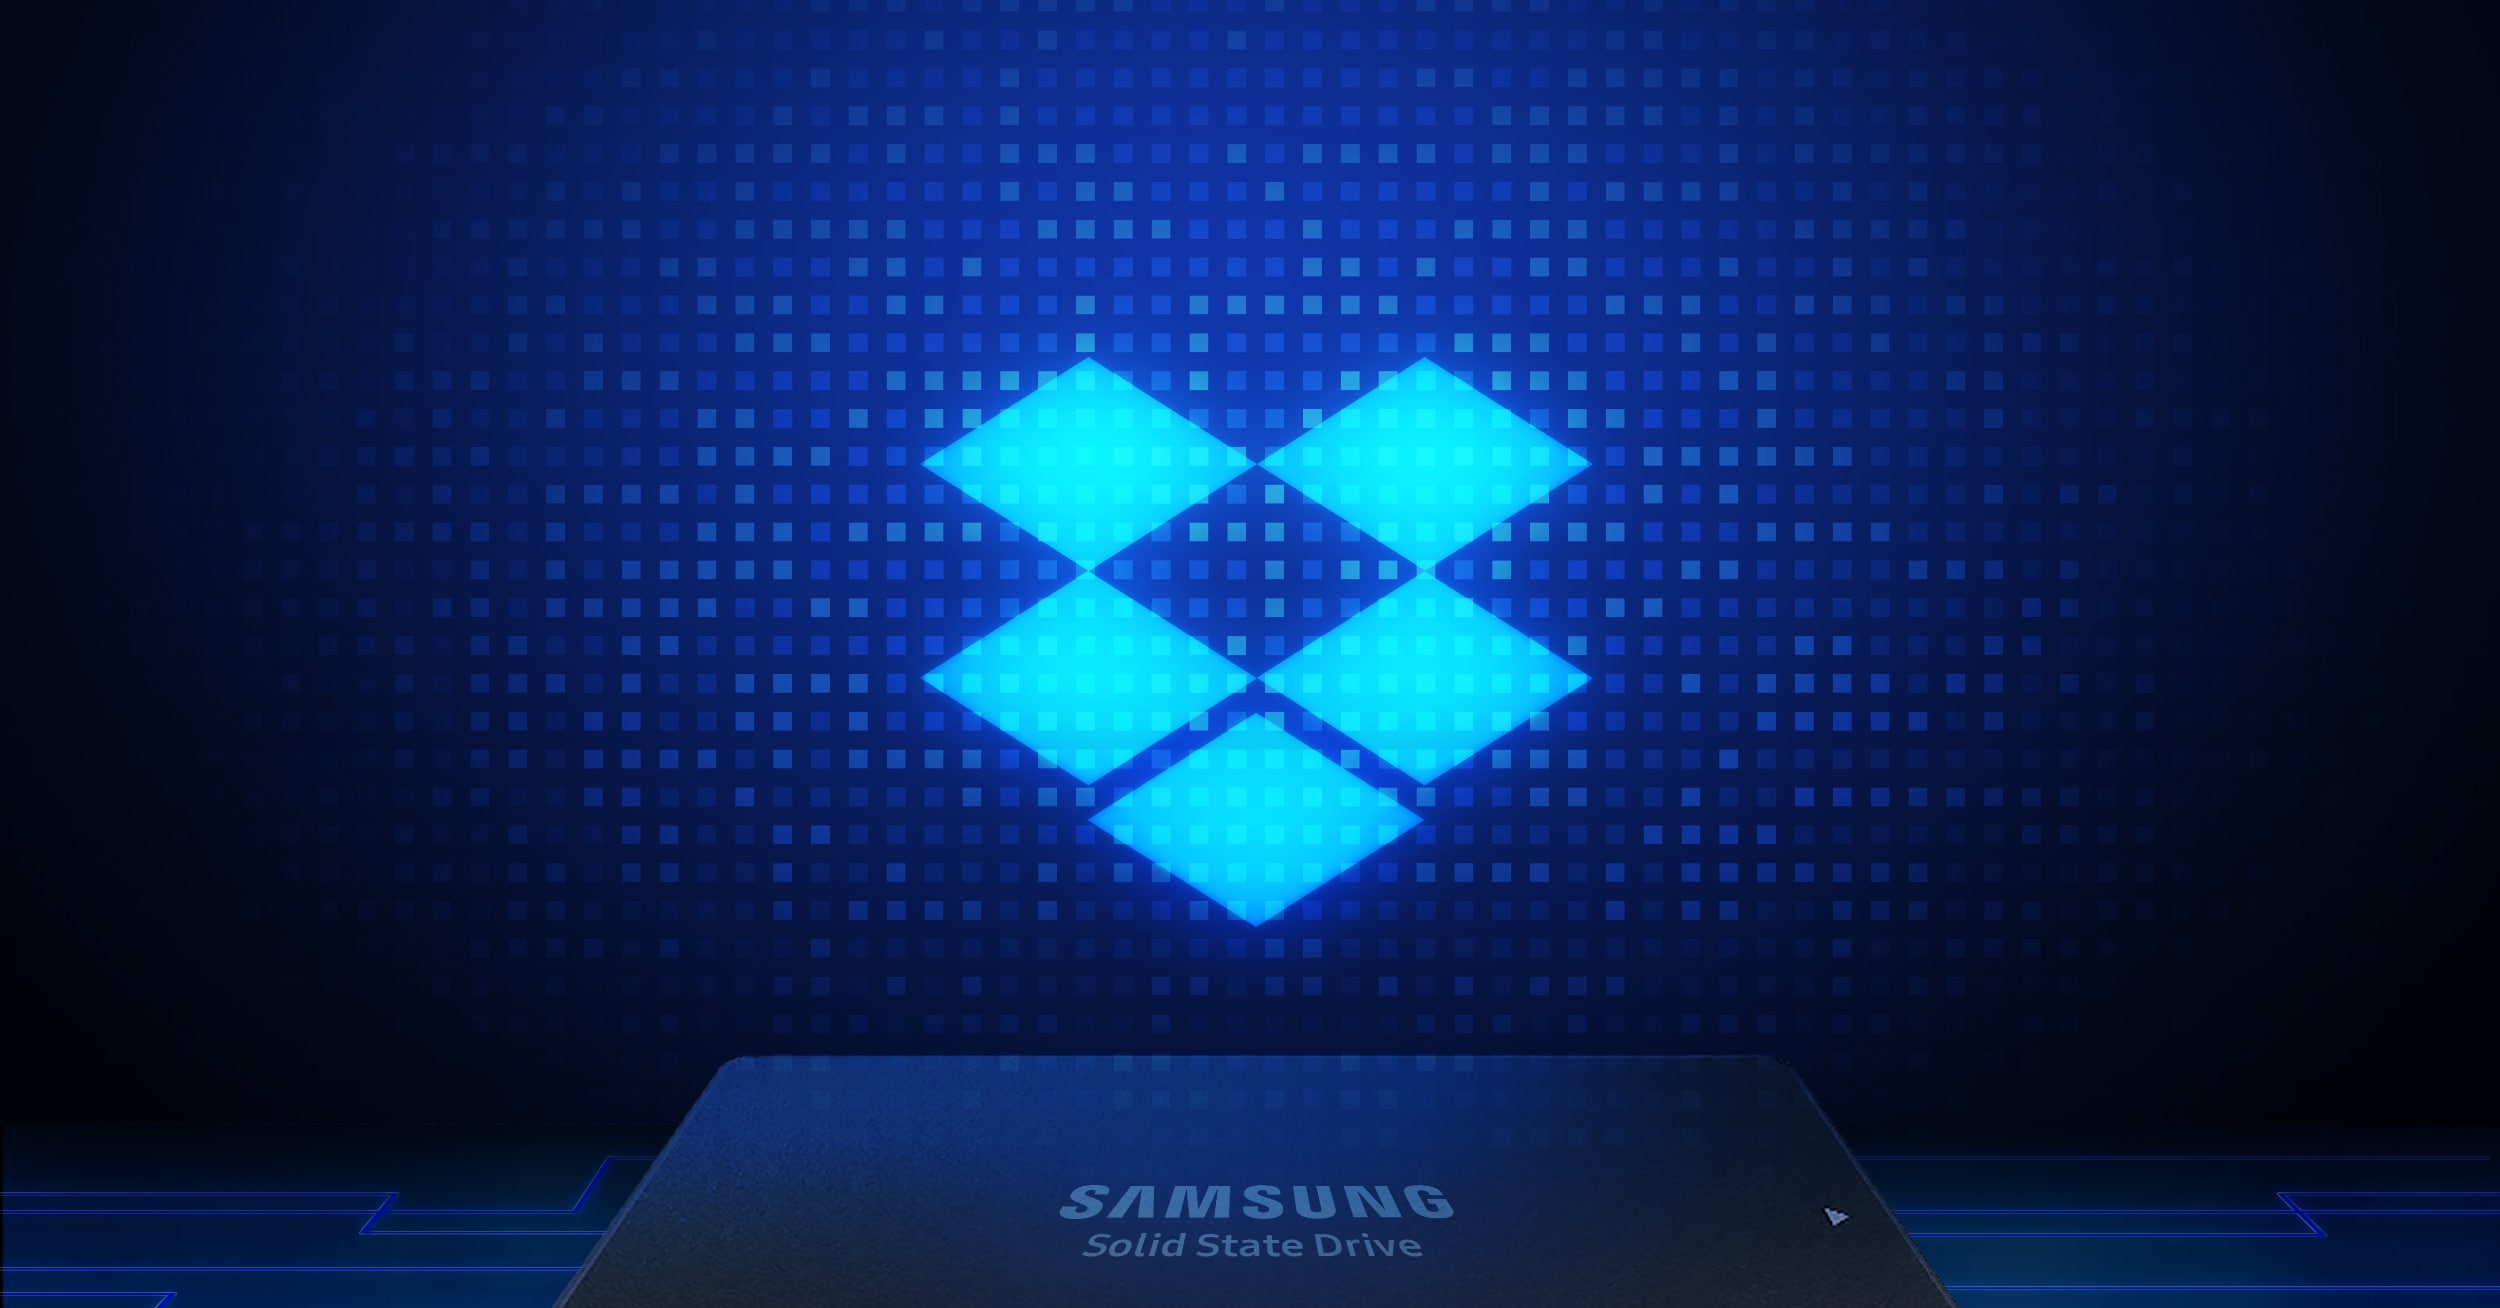 Dropbox logo shining on Samsung SSD products